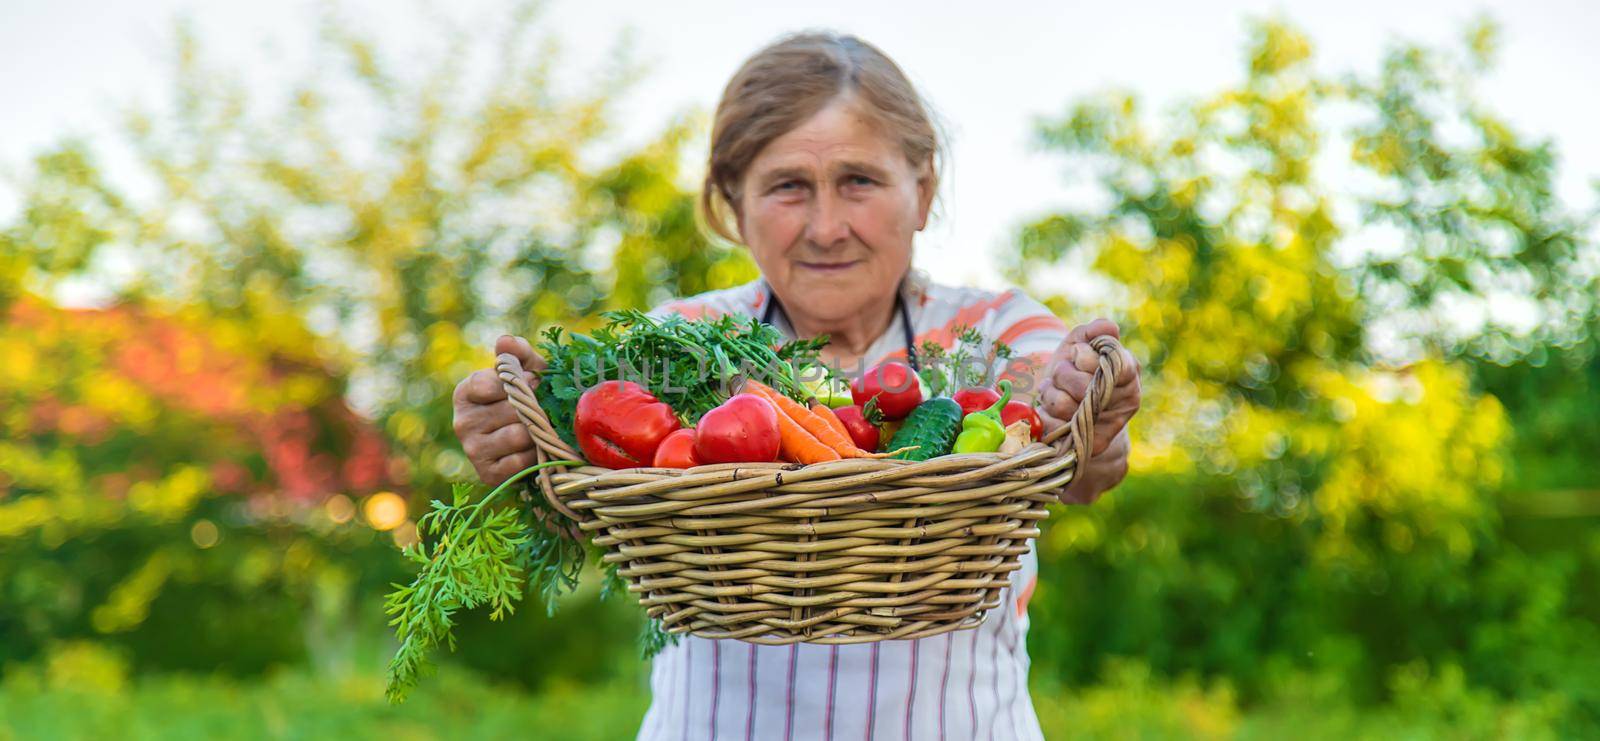 Senior woman harvesting vegetables in the garden. Selective focus. Food.